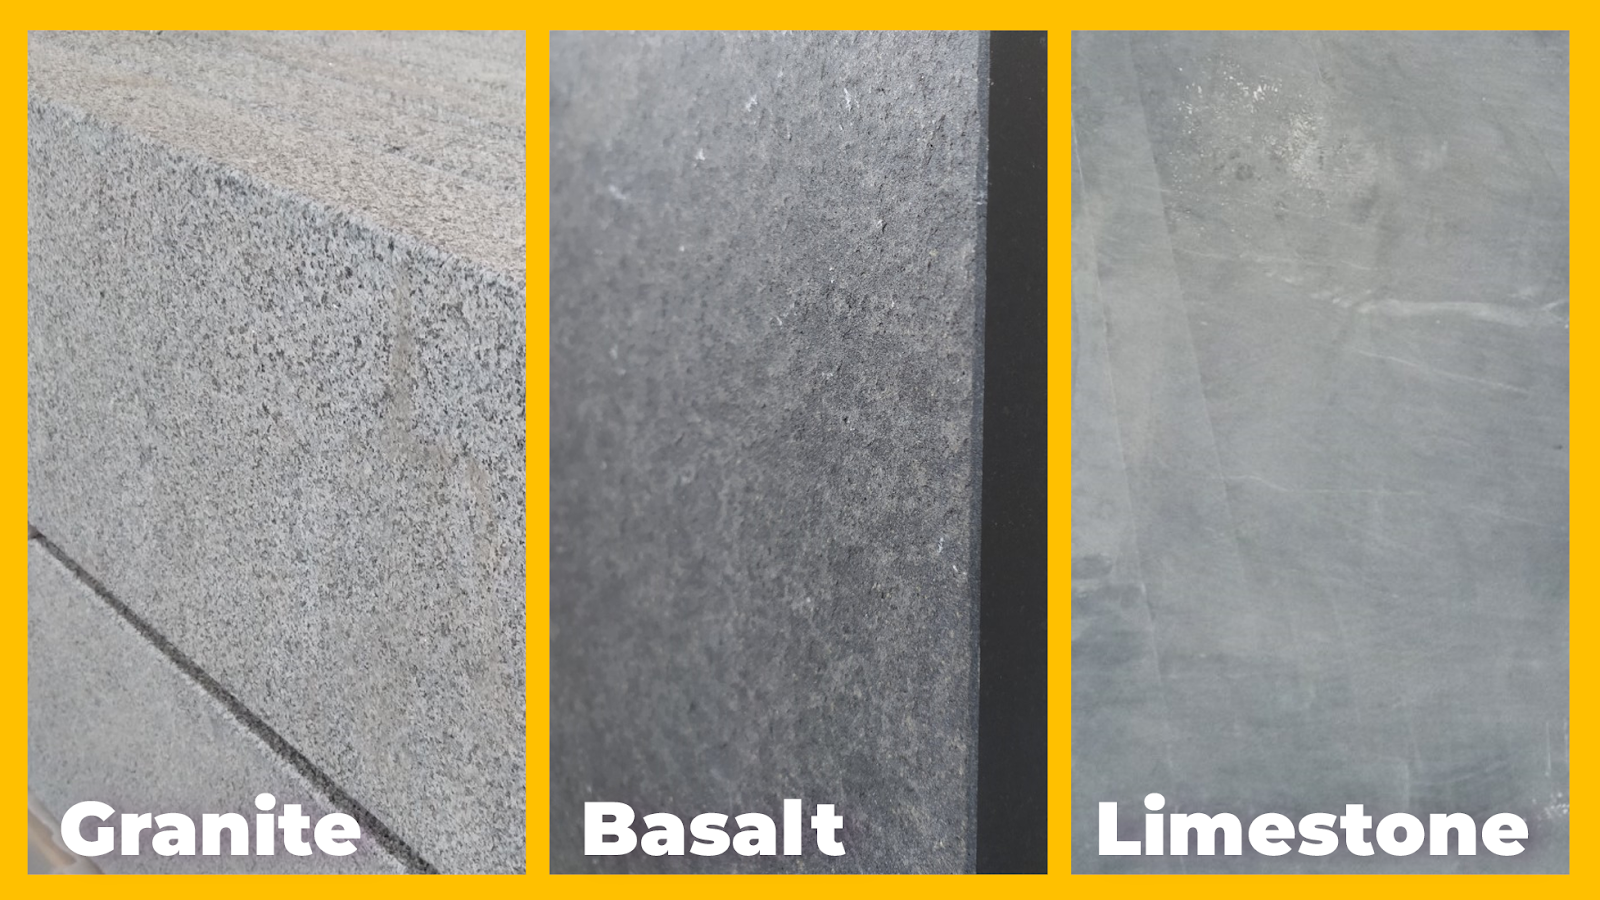 Durability comparison among Granite, Basalt and Limestone